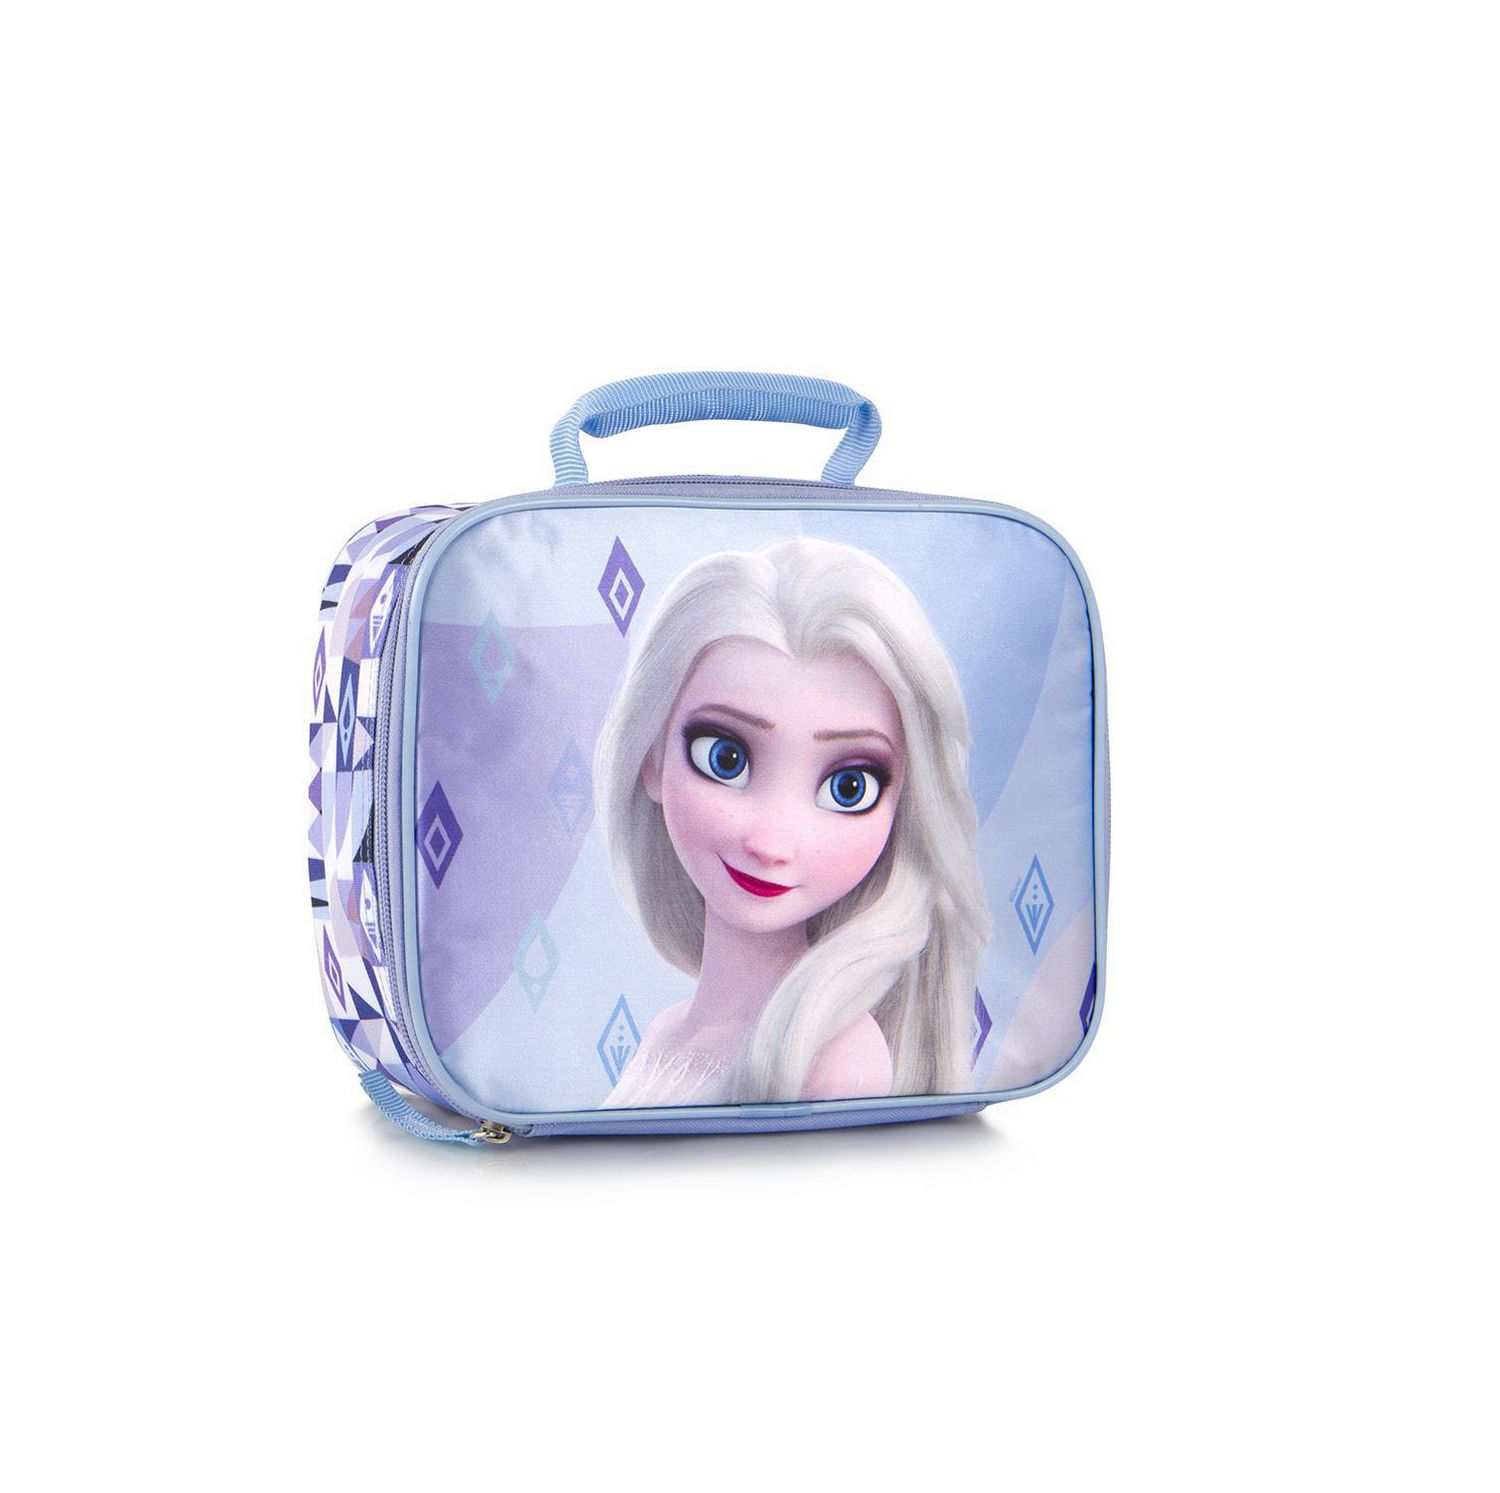 Original Disney 3D School Insulated Lunch Bag Girl Princess or Doc McStuffins 